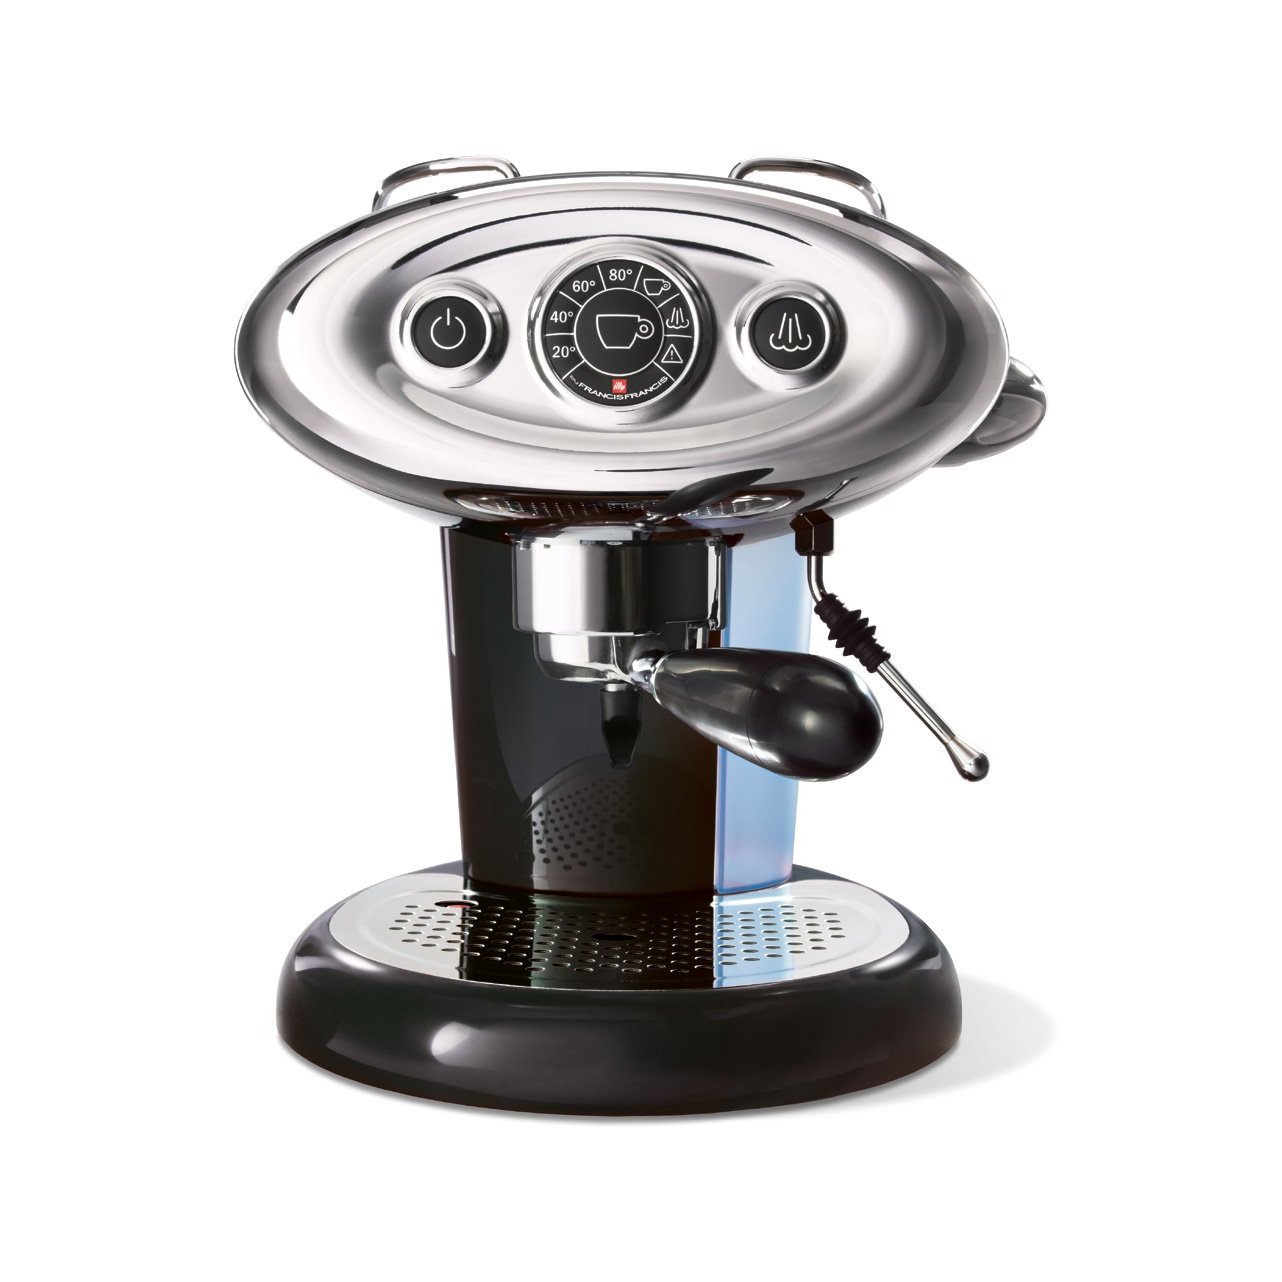 Francis Francis X7 Espresso Machine for Easy Serving Espresso and Ground Coffee